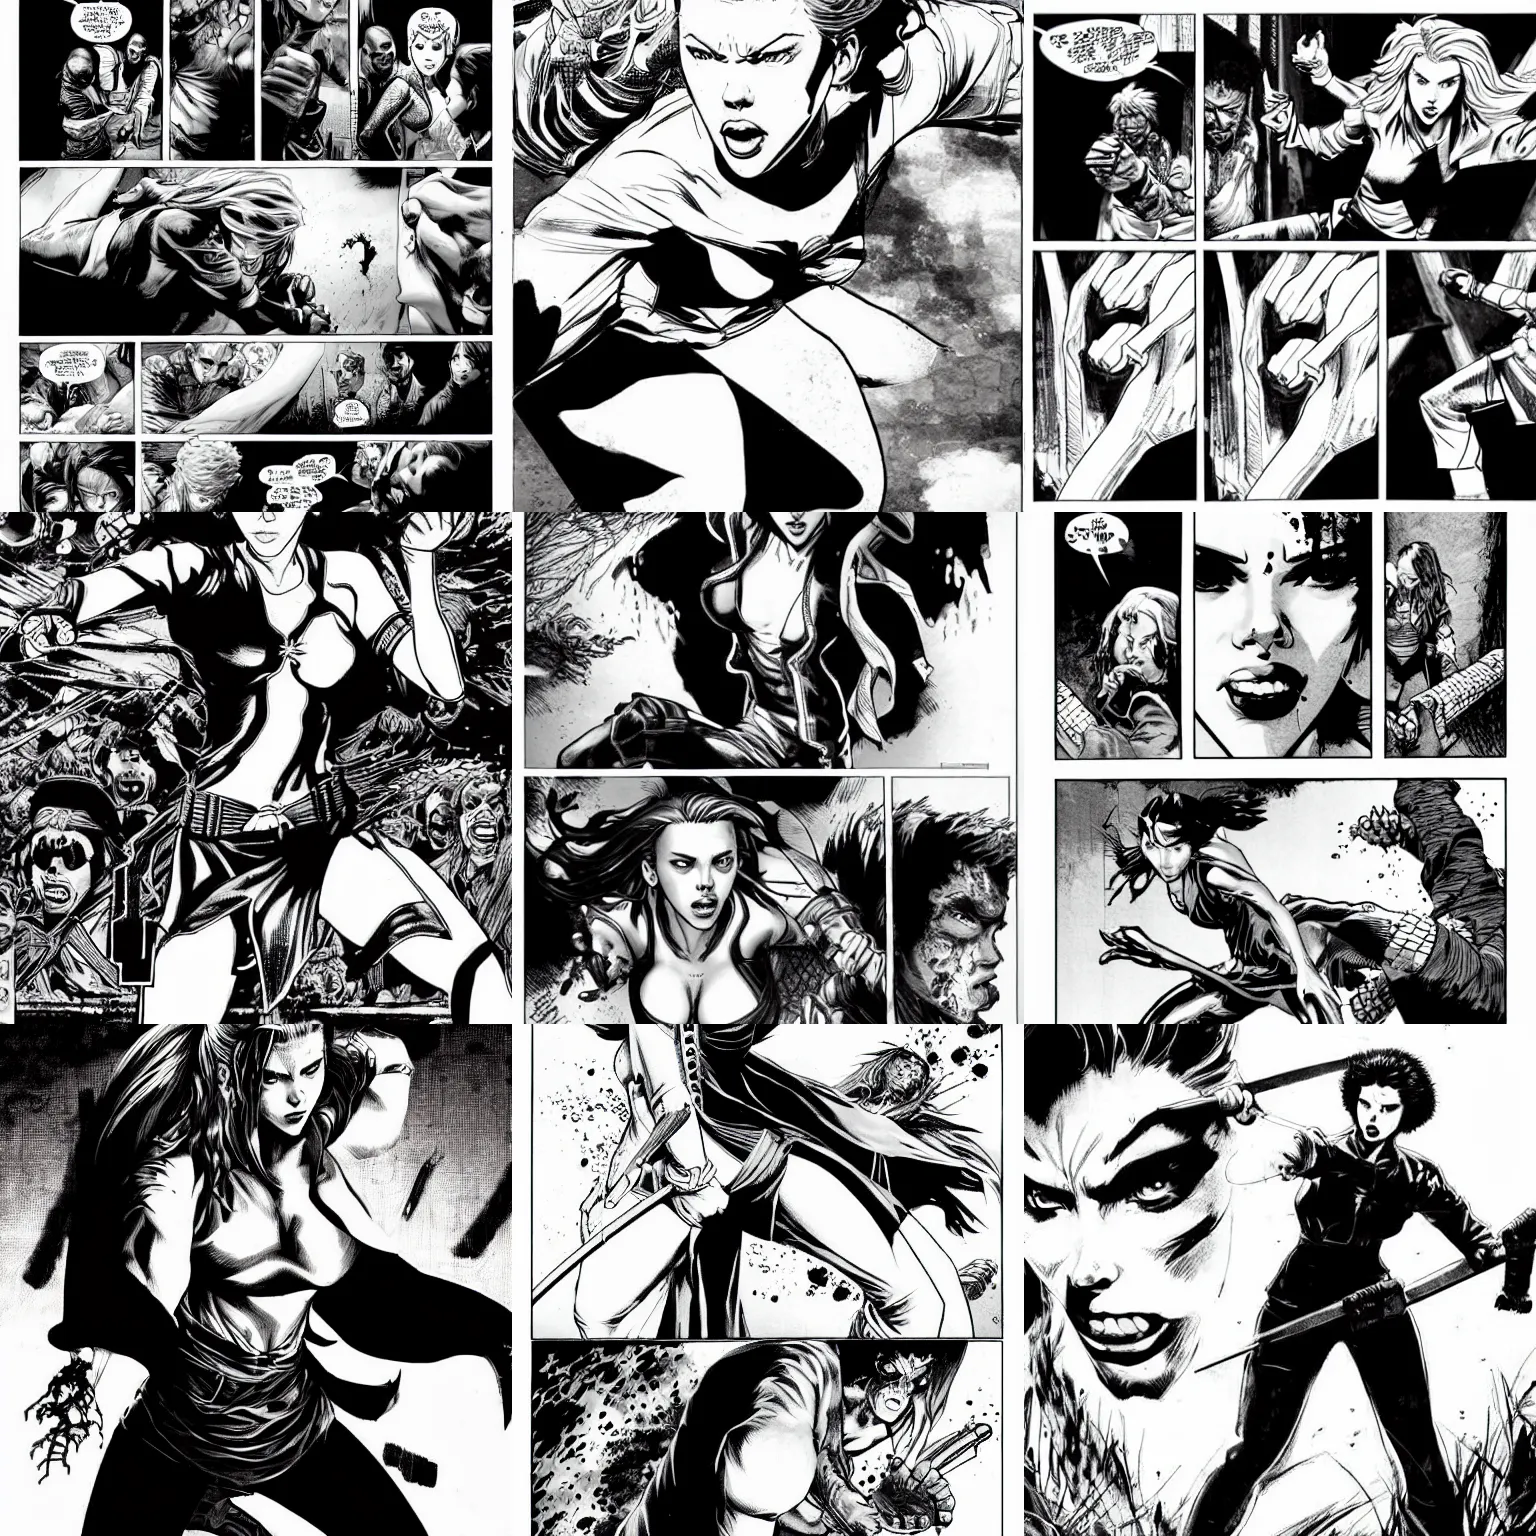 Prompt: scarlett johansson, symmetrical, kung - fu master fights zombie, scene by david finch, black and white, afro samurai manga style